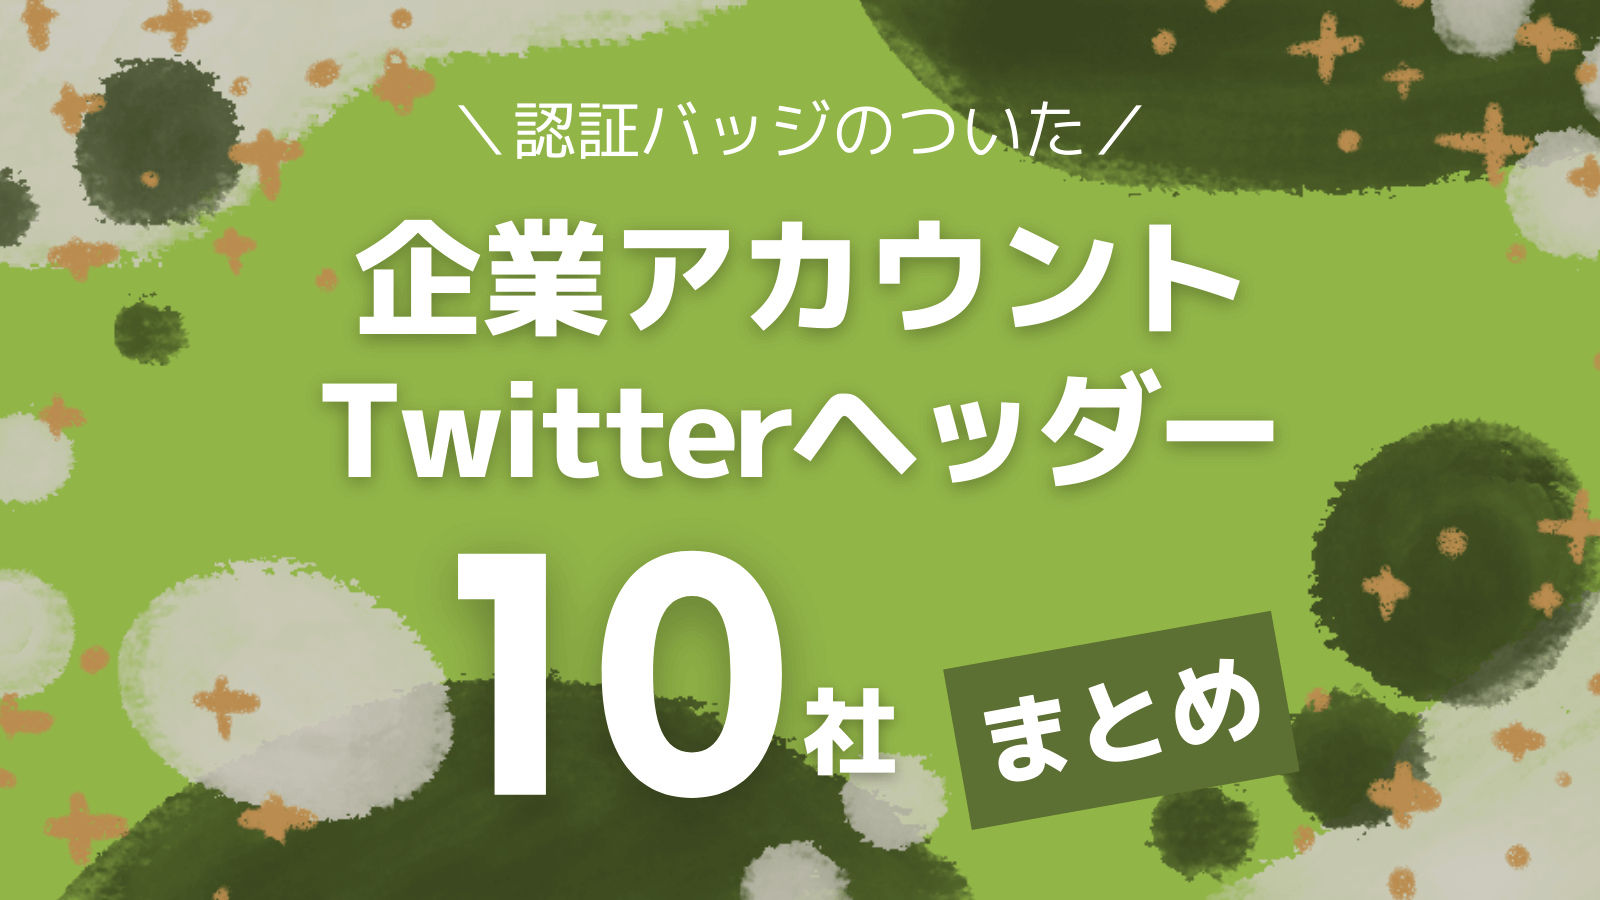 Twitter_badge